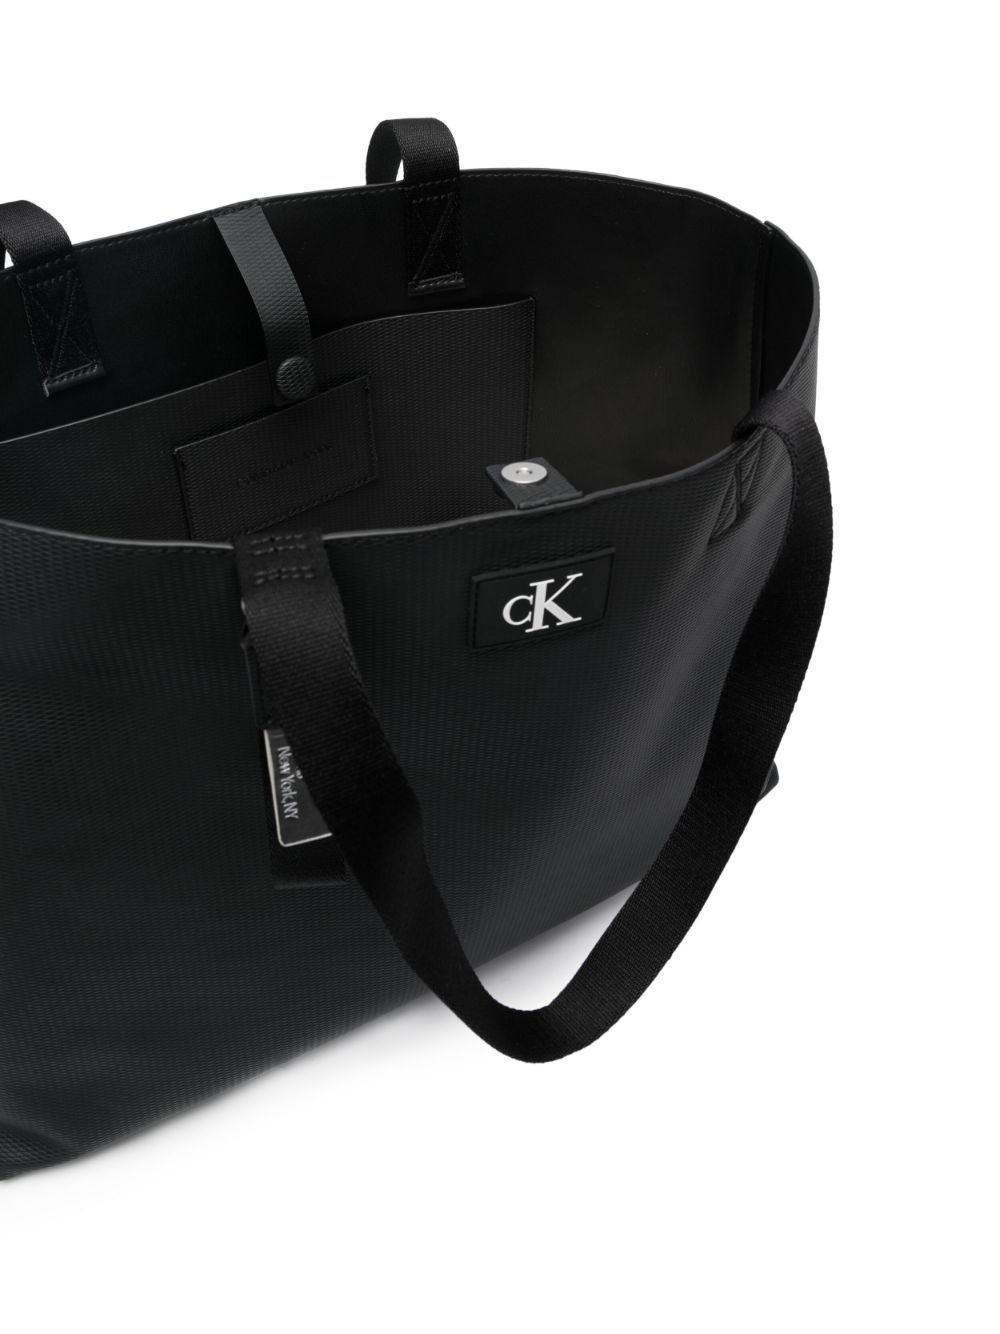 Calvin Klein logo-charm Tote Bag - Farfetch